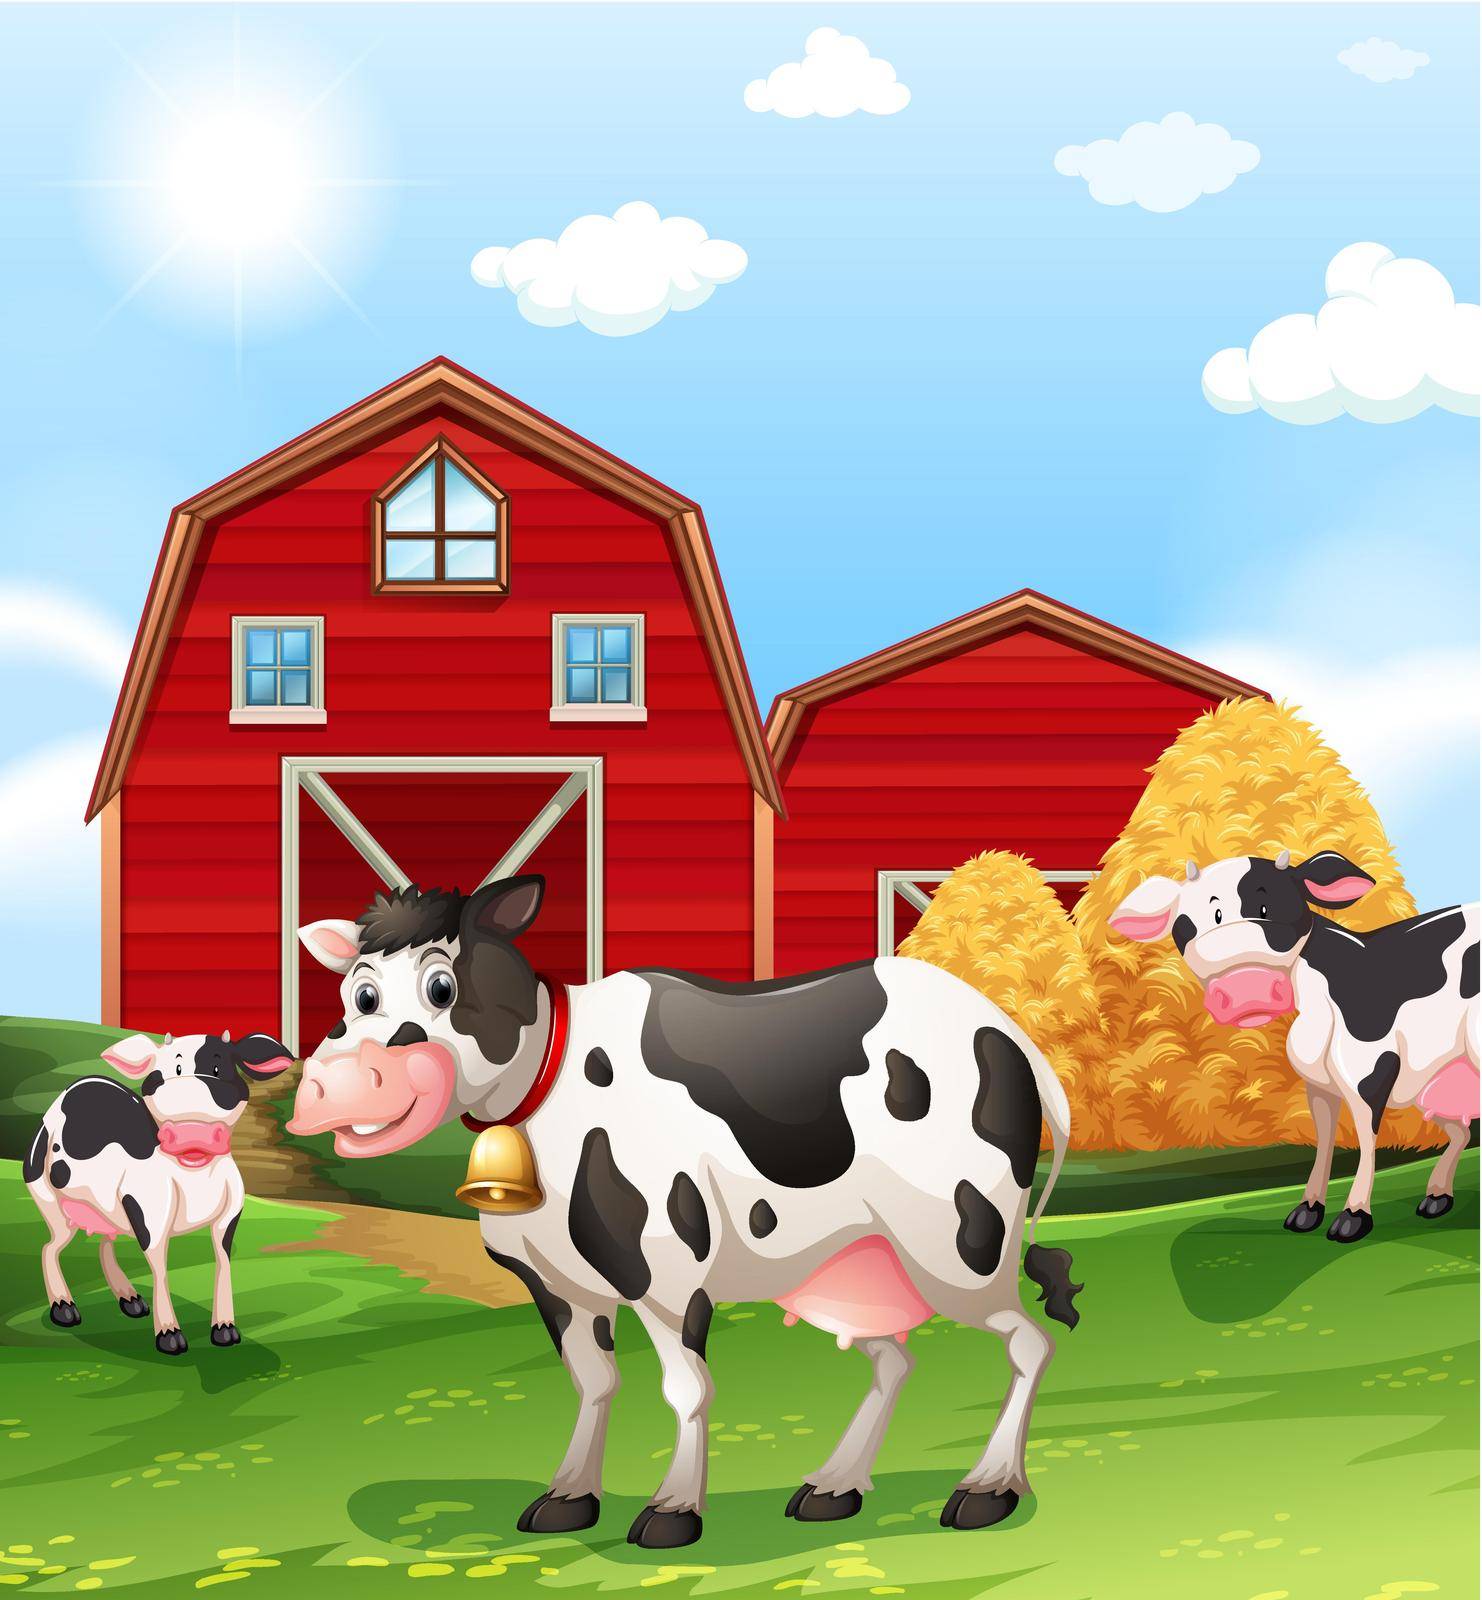 Cows in the farmland illustration